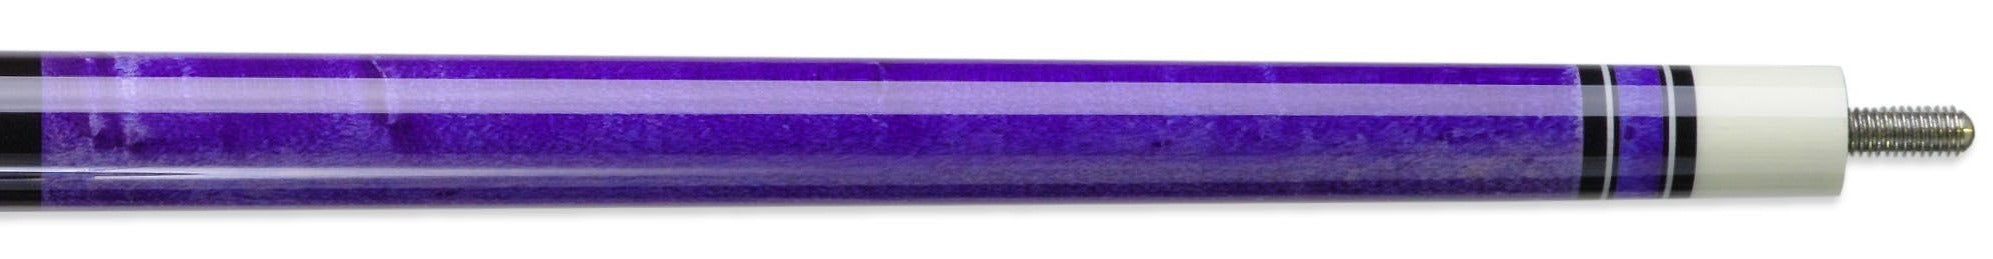 Meucci Luminous-Purple Pool Cue